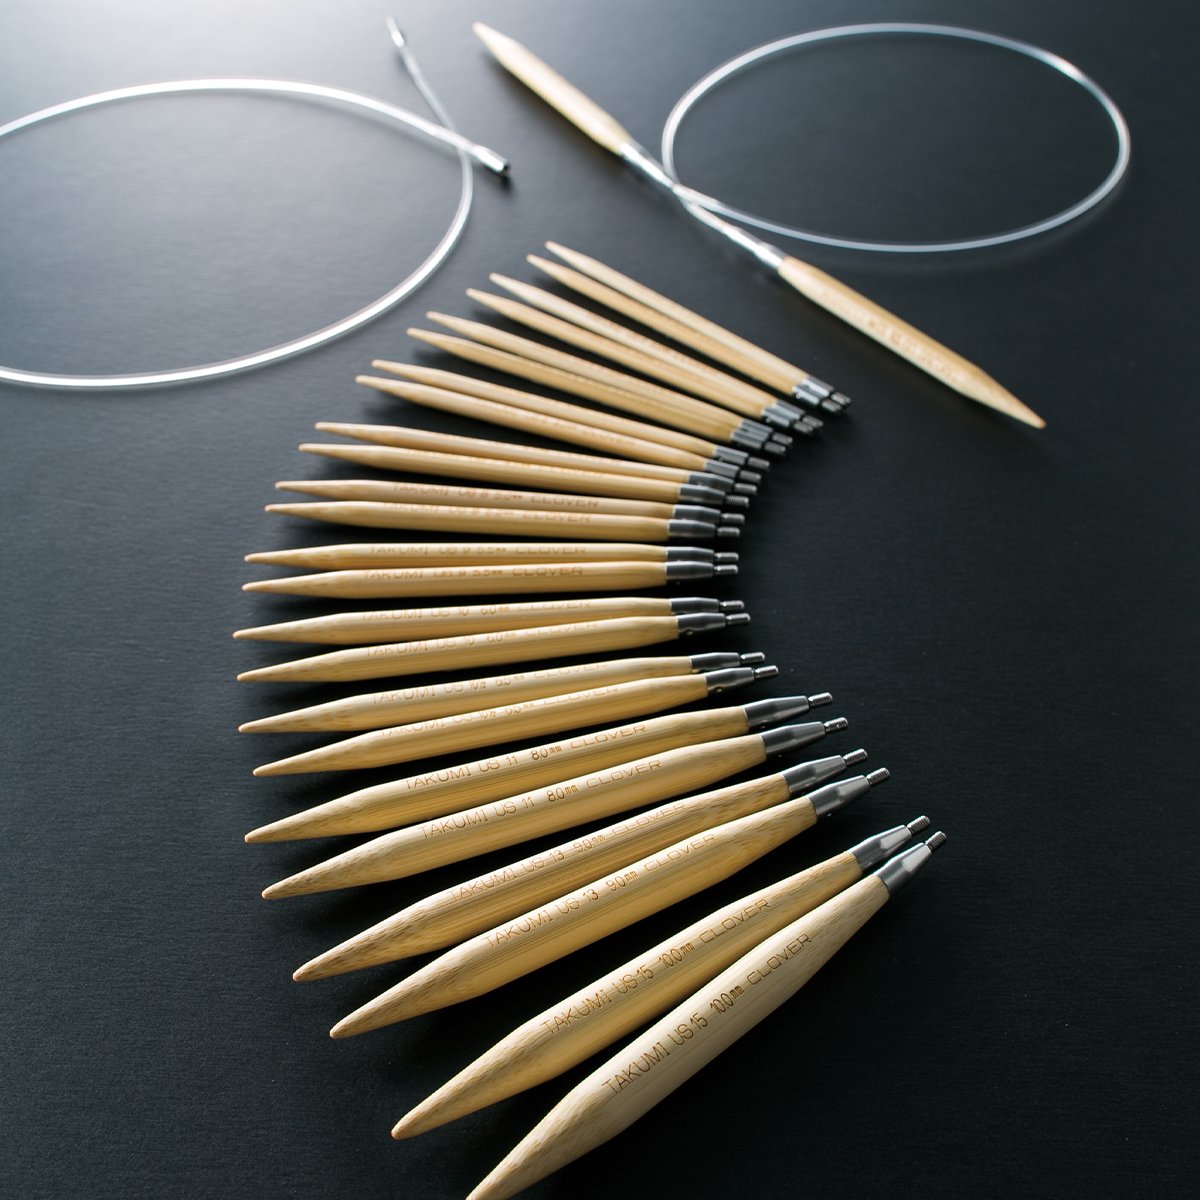 Takumi Bamboo Size 9 Single Point Knitting Needles 9 Long, 5.5mm, 1 Set  Clover